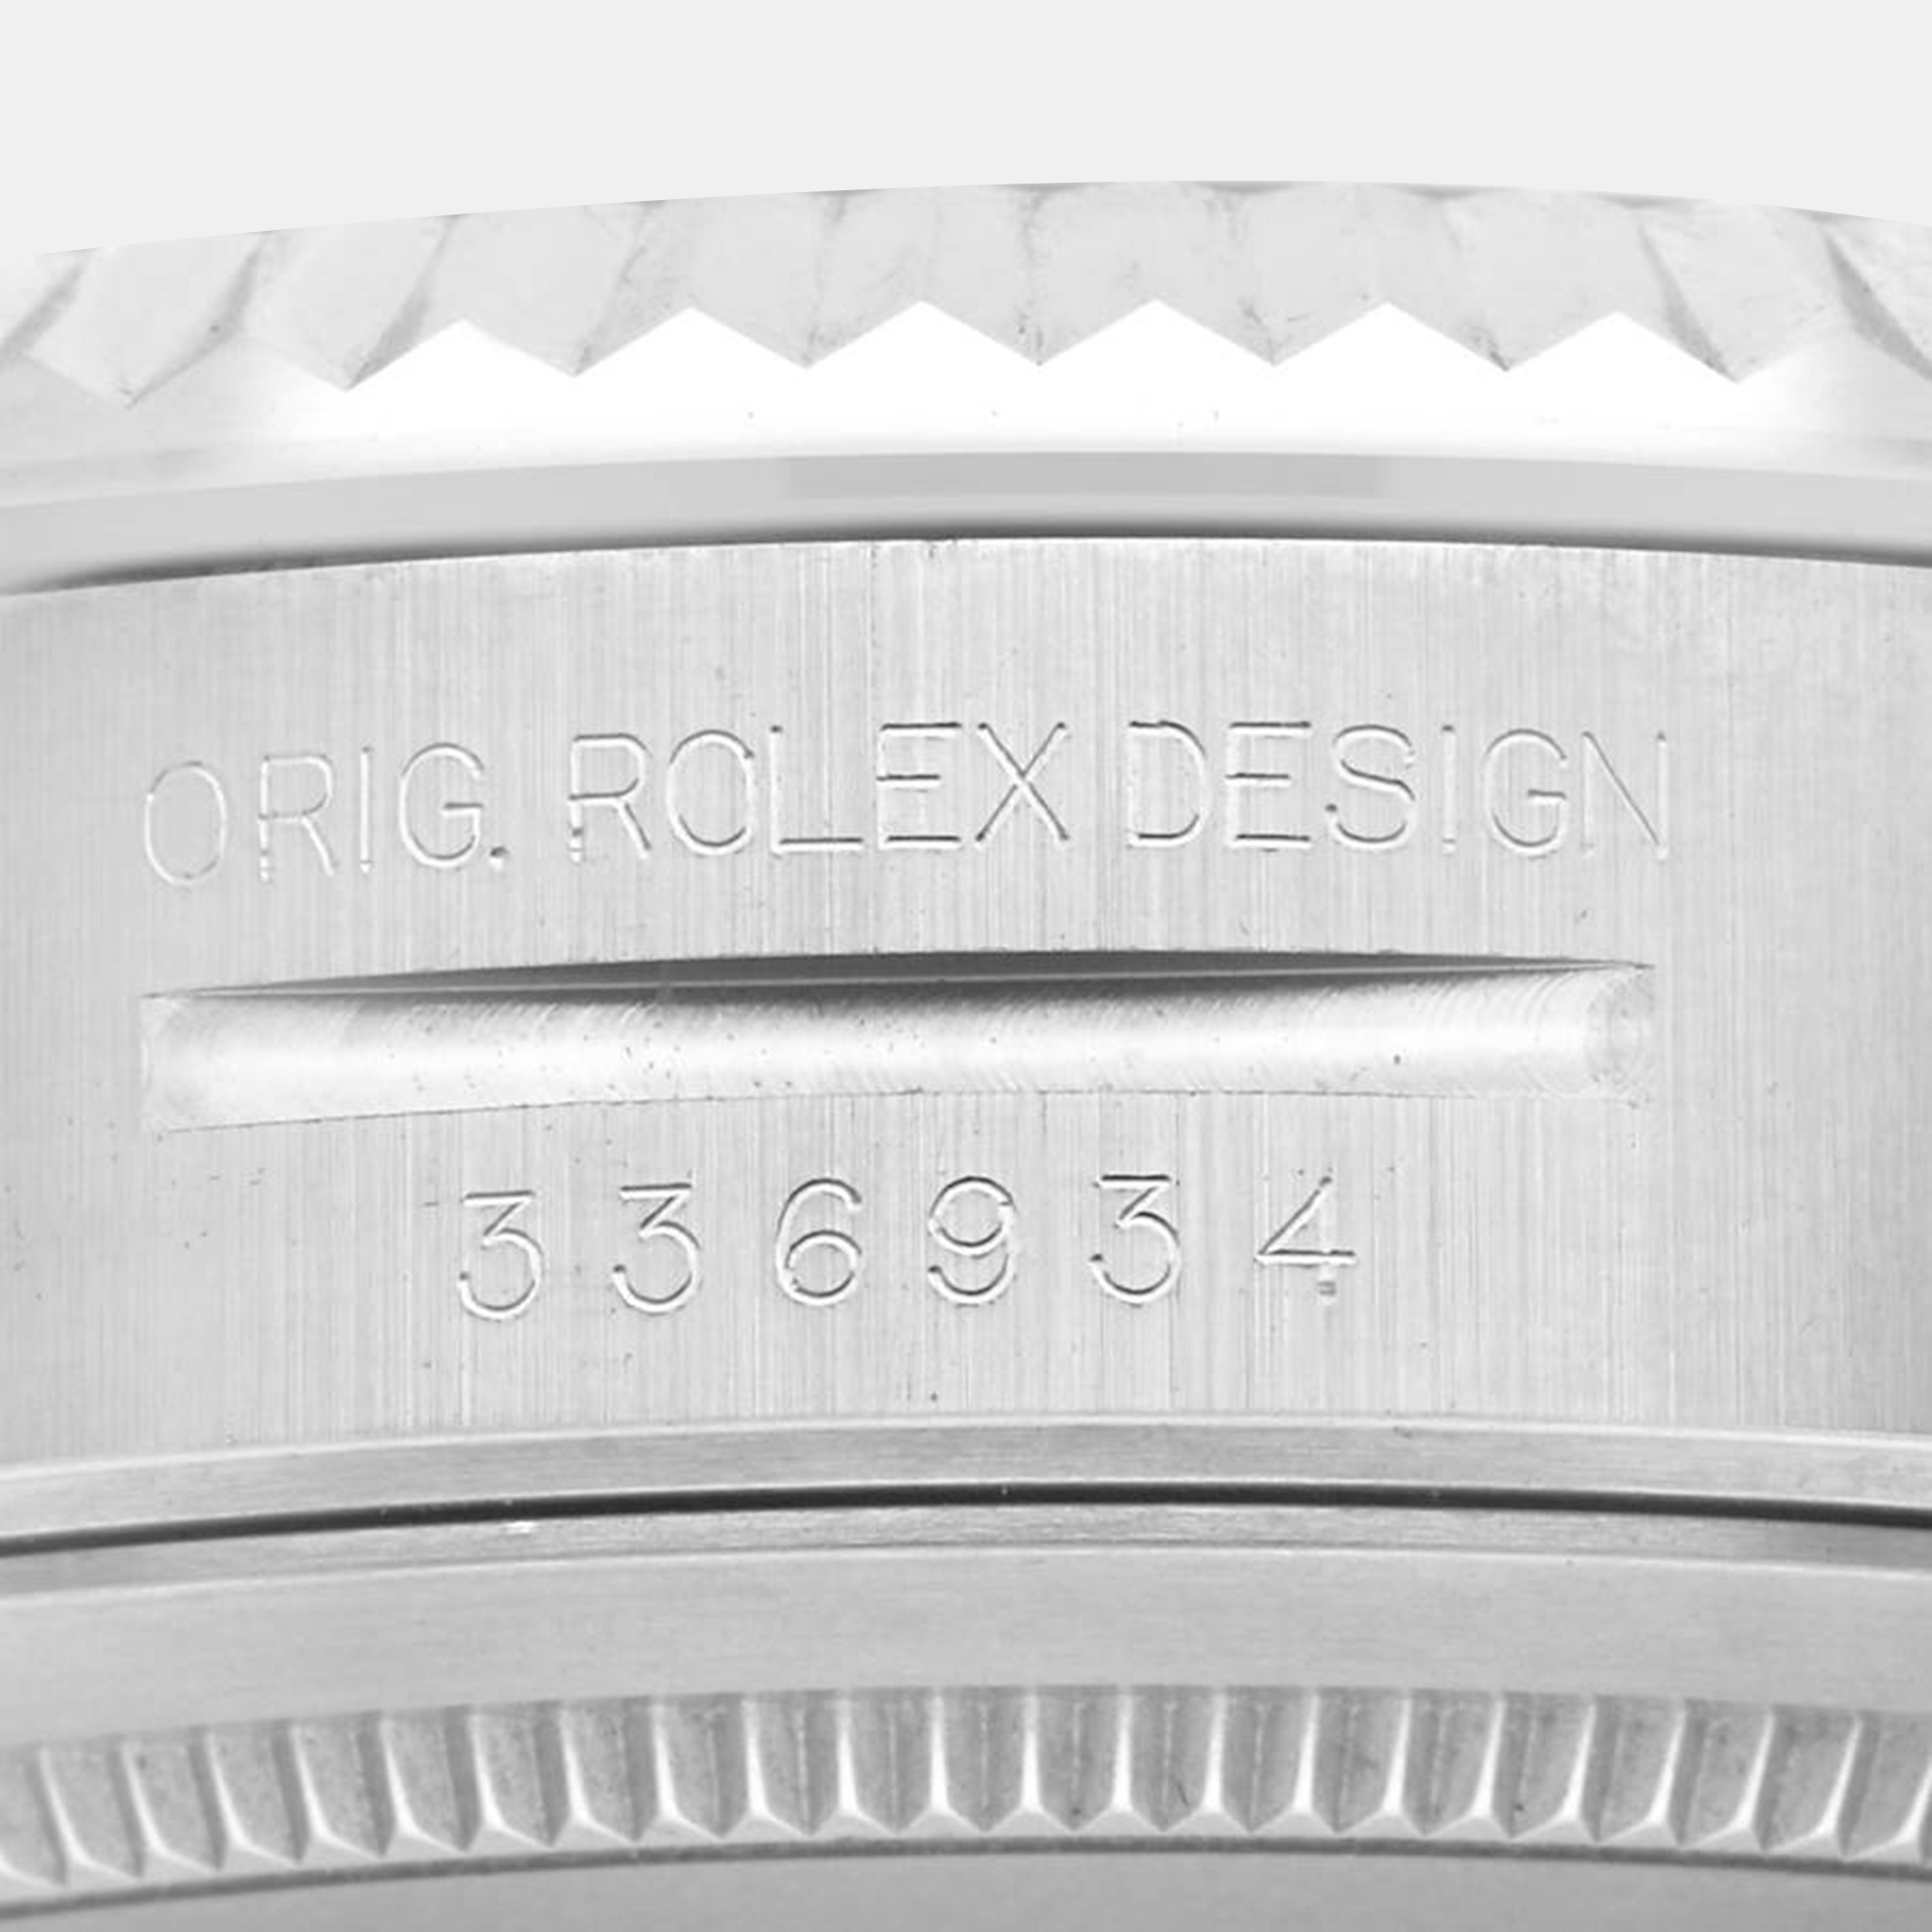 Rolex Sky-Dweller Steel White Gold Mens Watch 336934  42 Mm